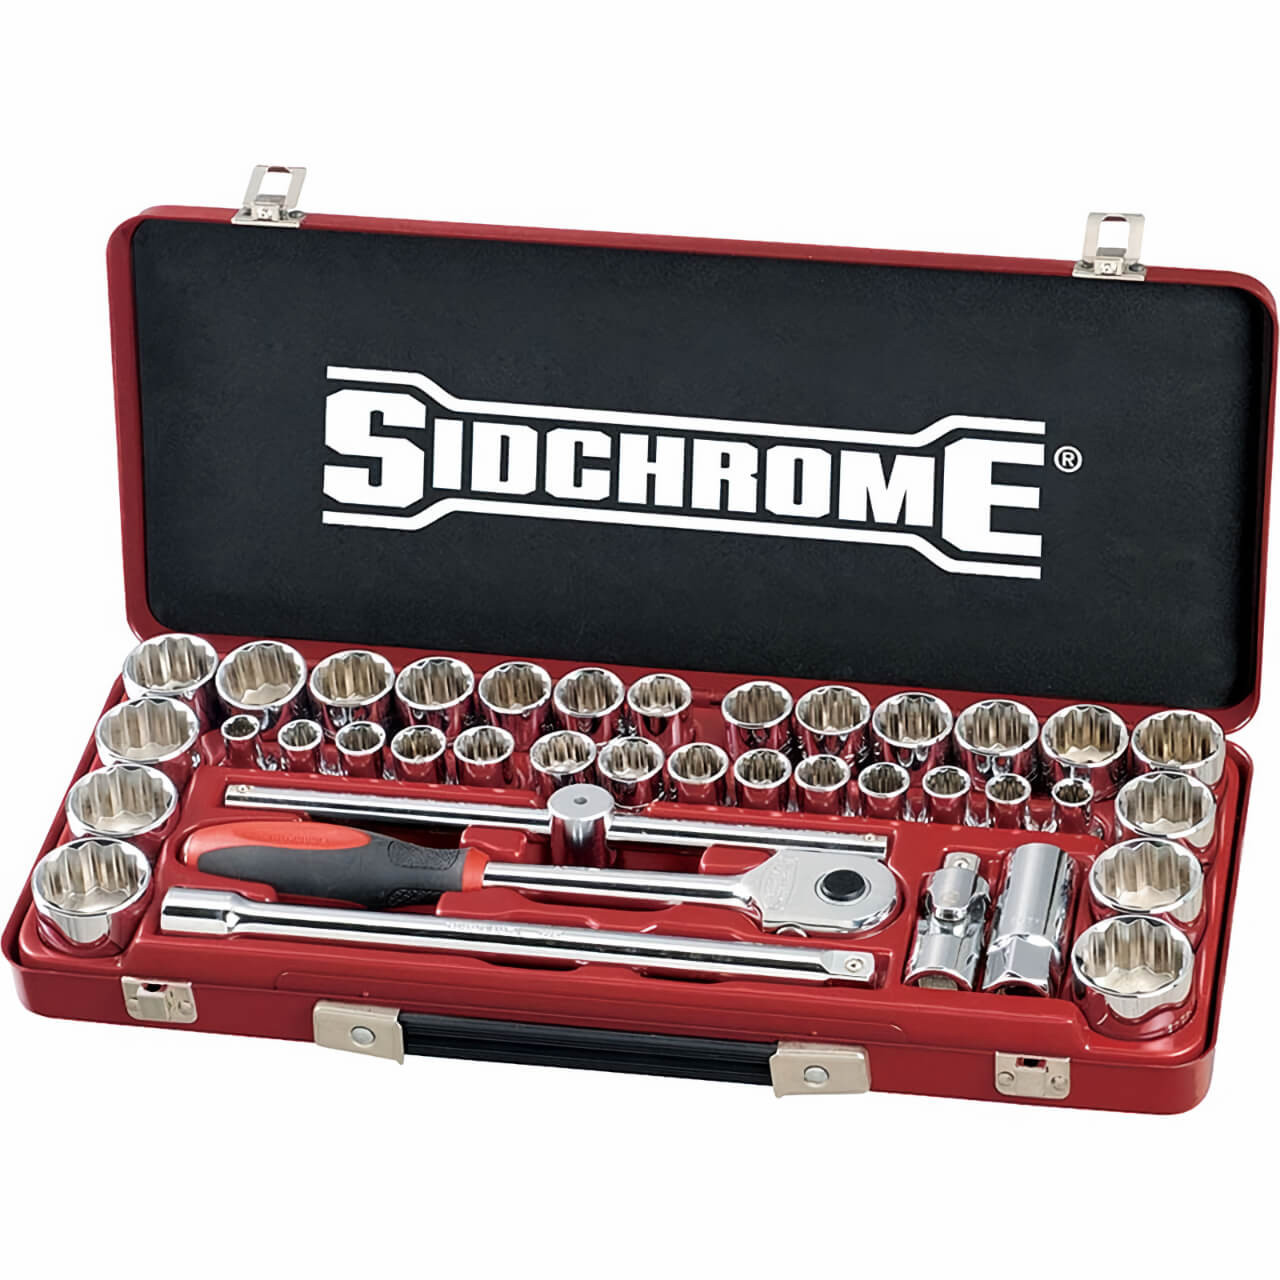 Sidchrome 1/2 Dr Socket Set Metric & Imperial 40pce